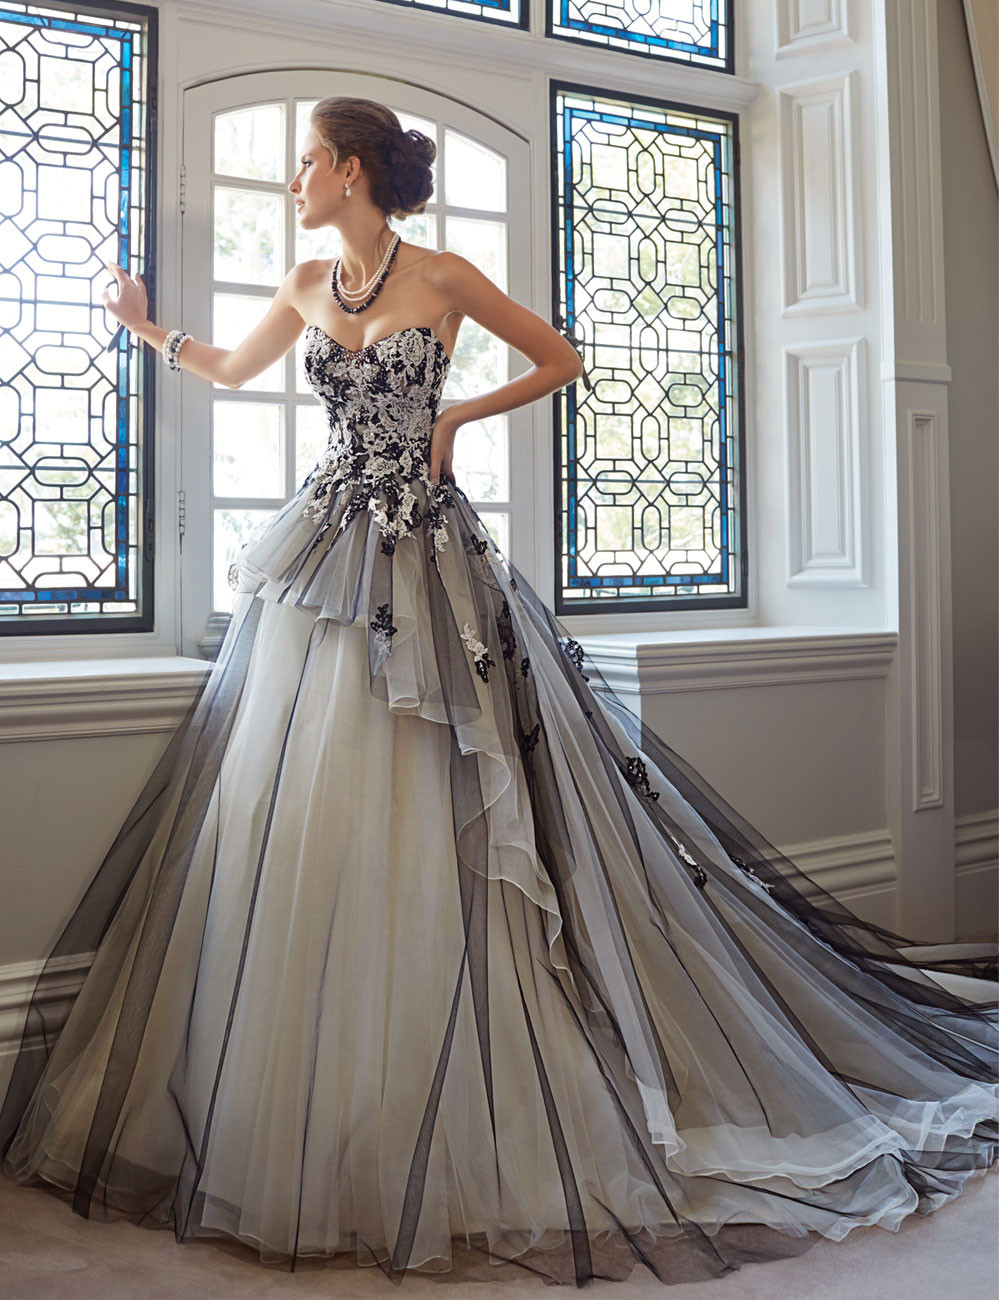 Fantasy Wedding Gowns
 line Get Cheap Fantasy Wedding Dress Aliexpress